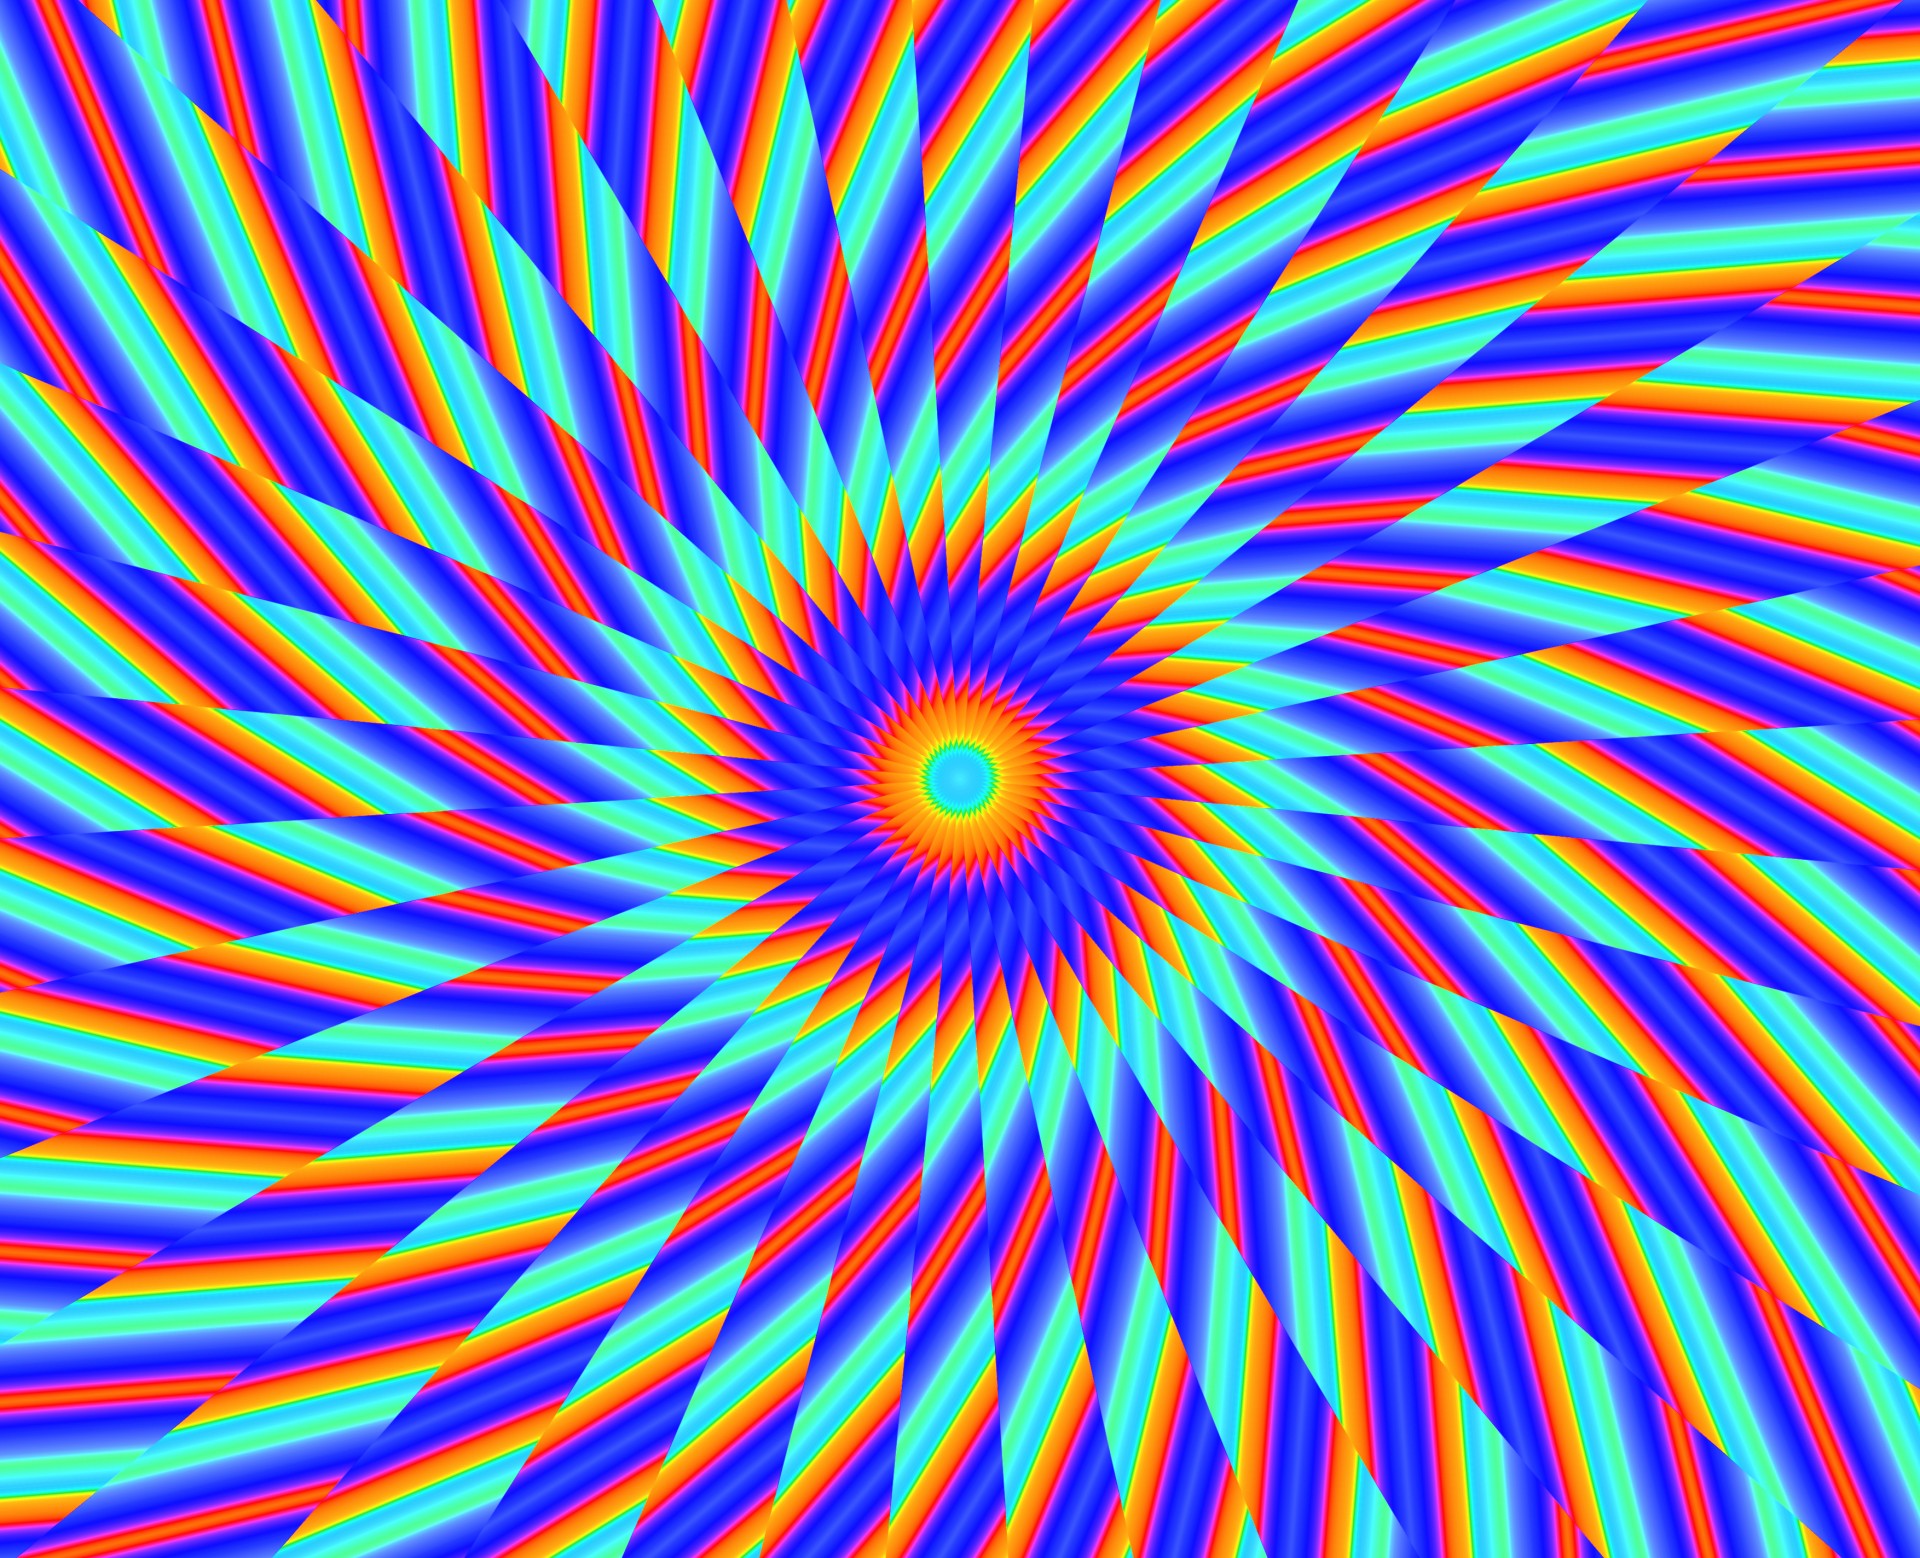 public domain wallpaper,psychedelic art,pattern,circle,spiral,symmetry